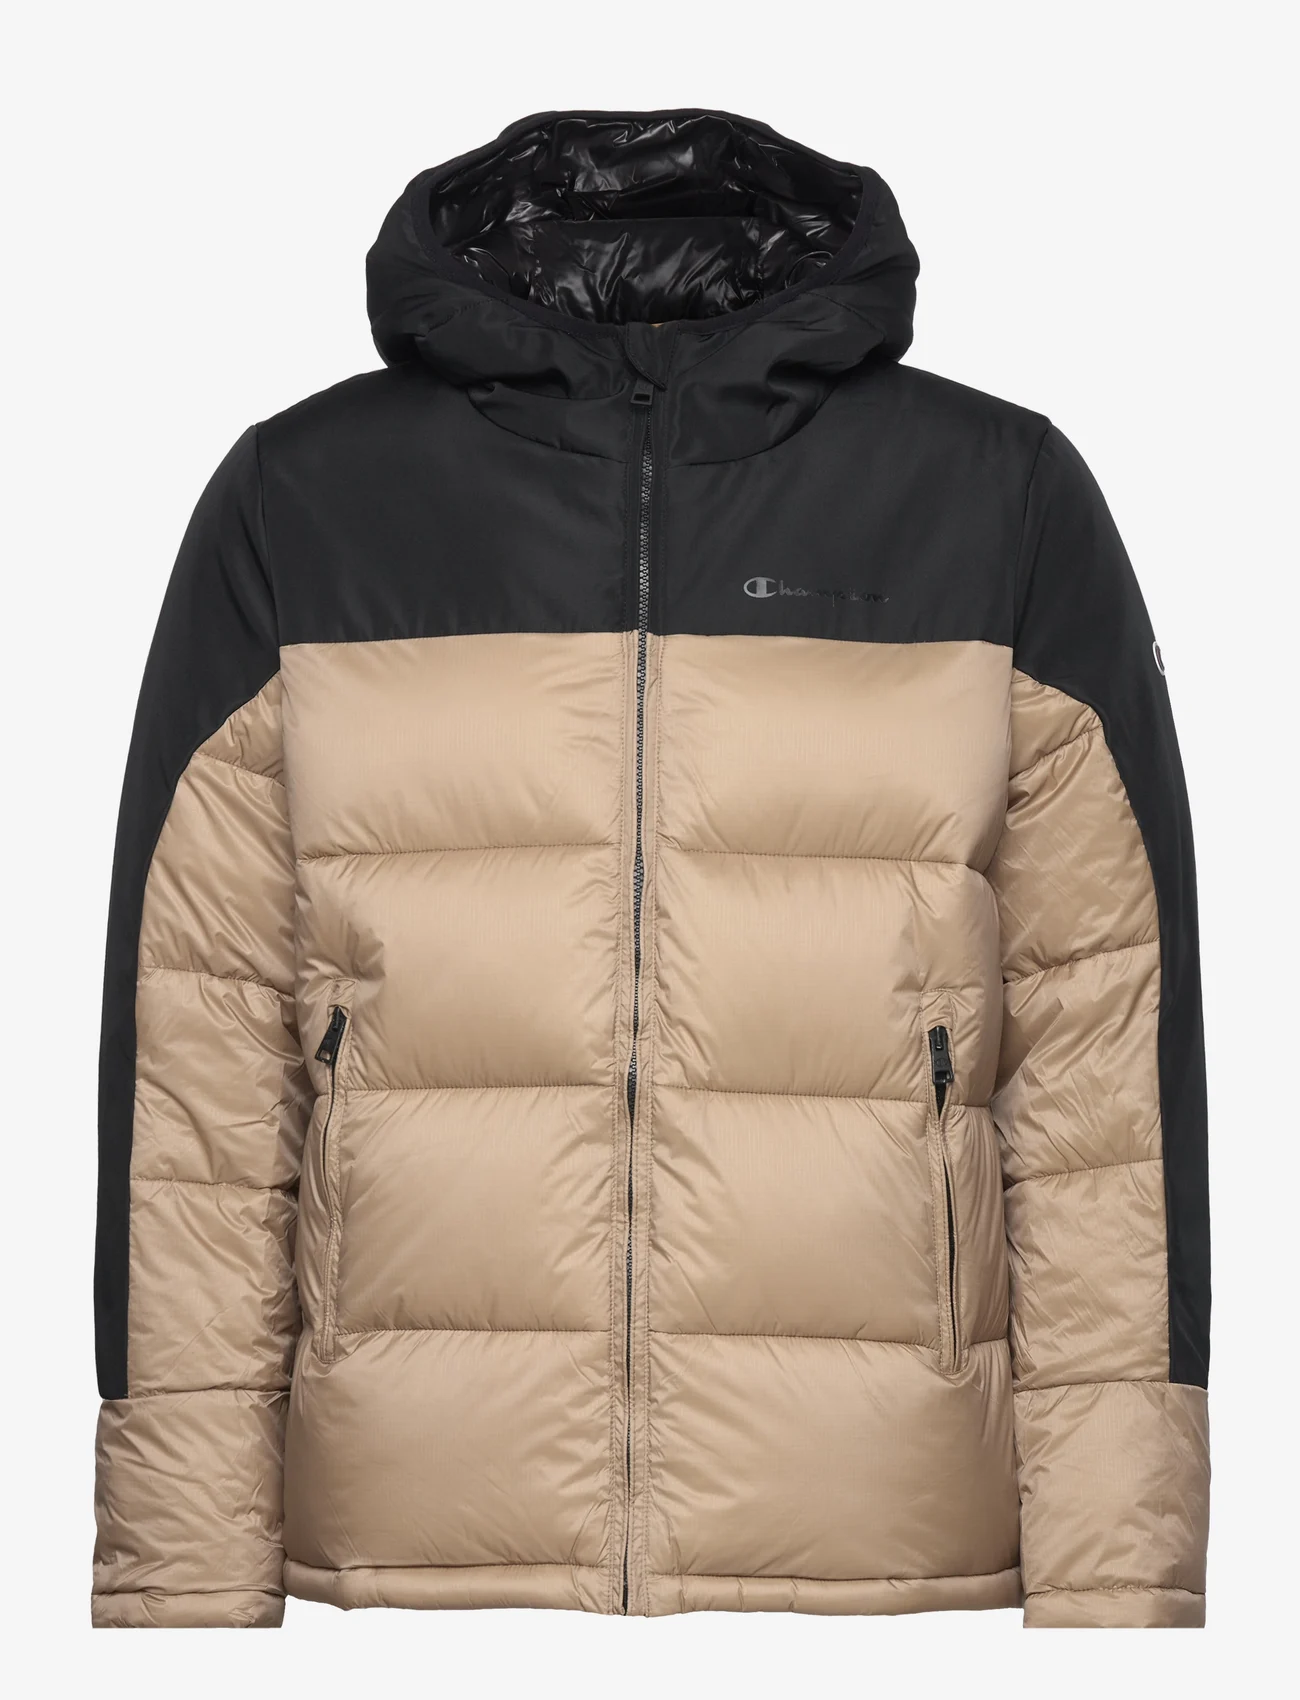 Champion - Hooded Jacket - winter jackets - silver mink - 0